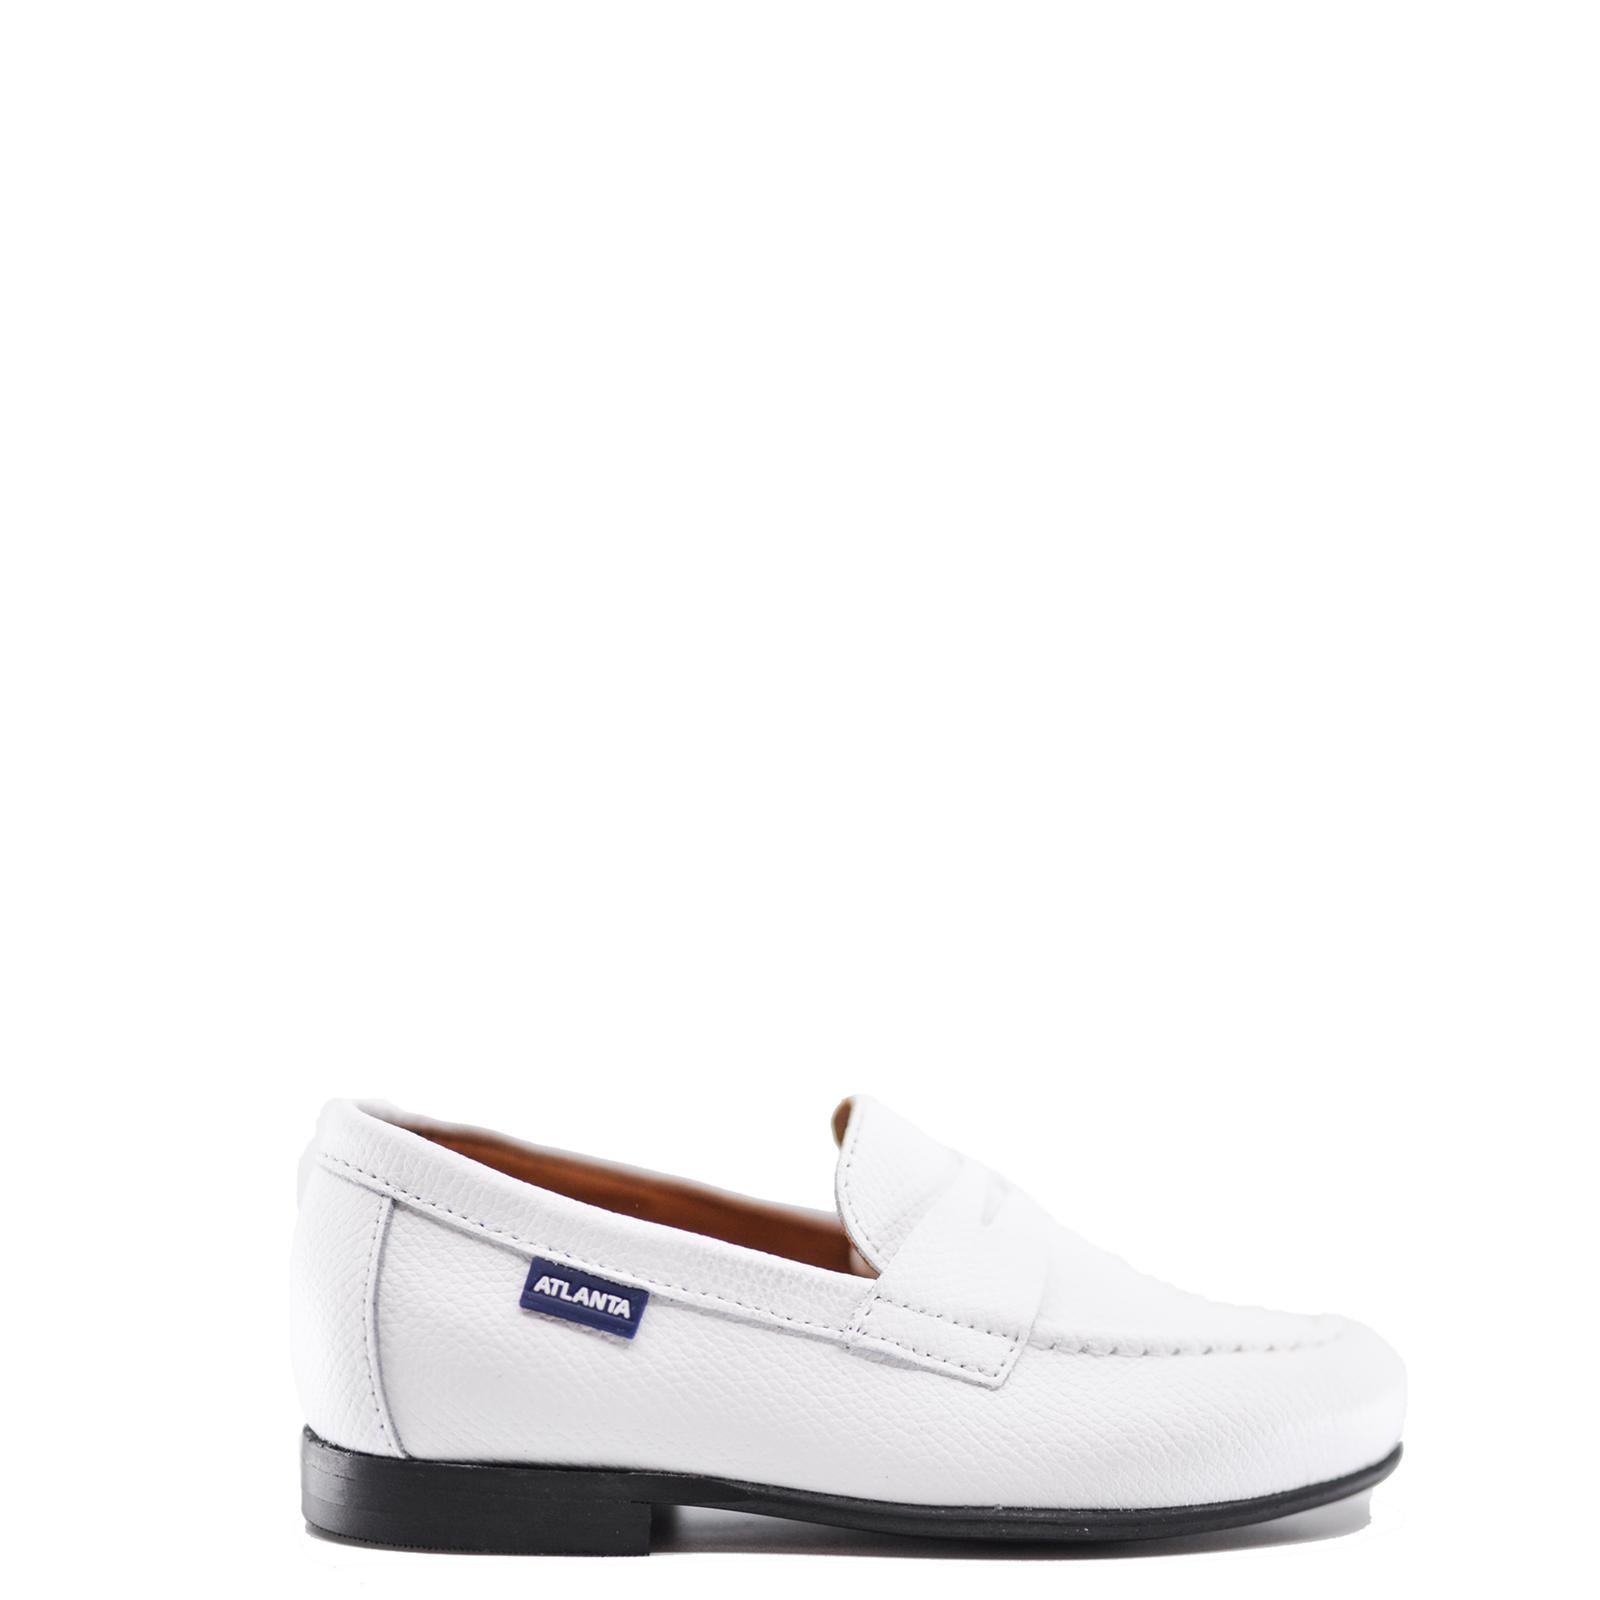 Atlanta Mocassin White Leather Penny Dress Shoe-Tassel Children Shoes